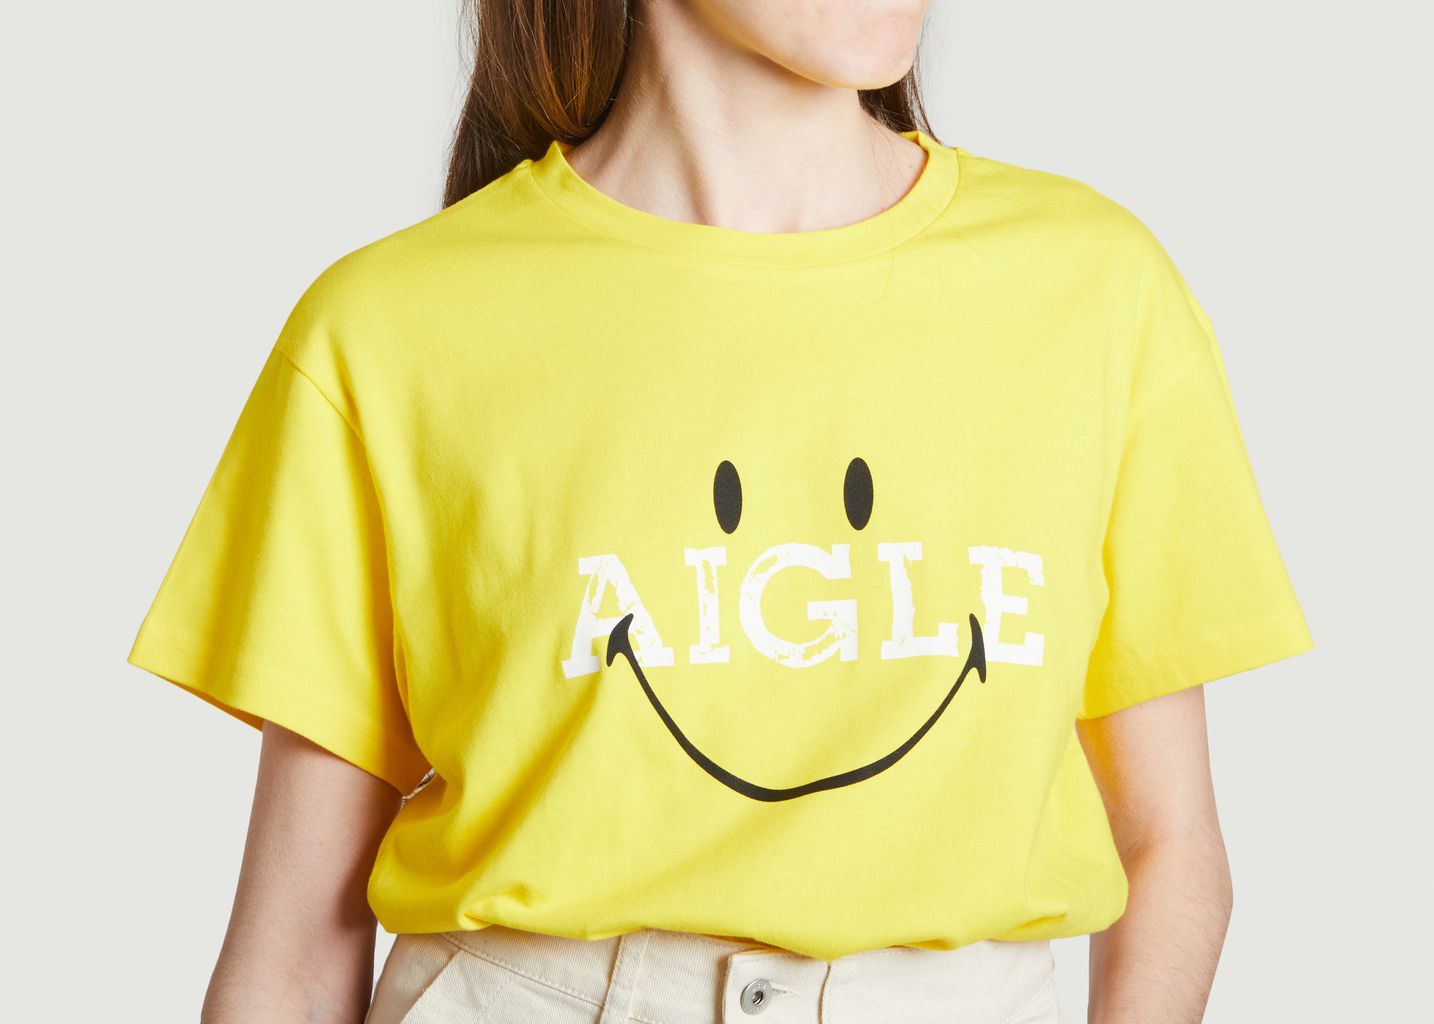 Eagle x Smiley T-shirt - Aigle